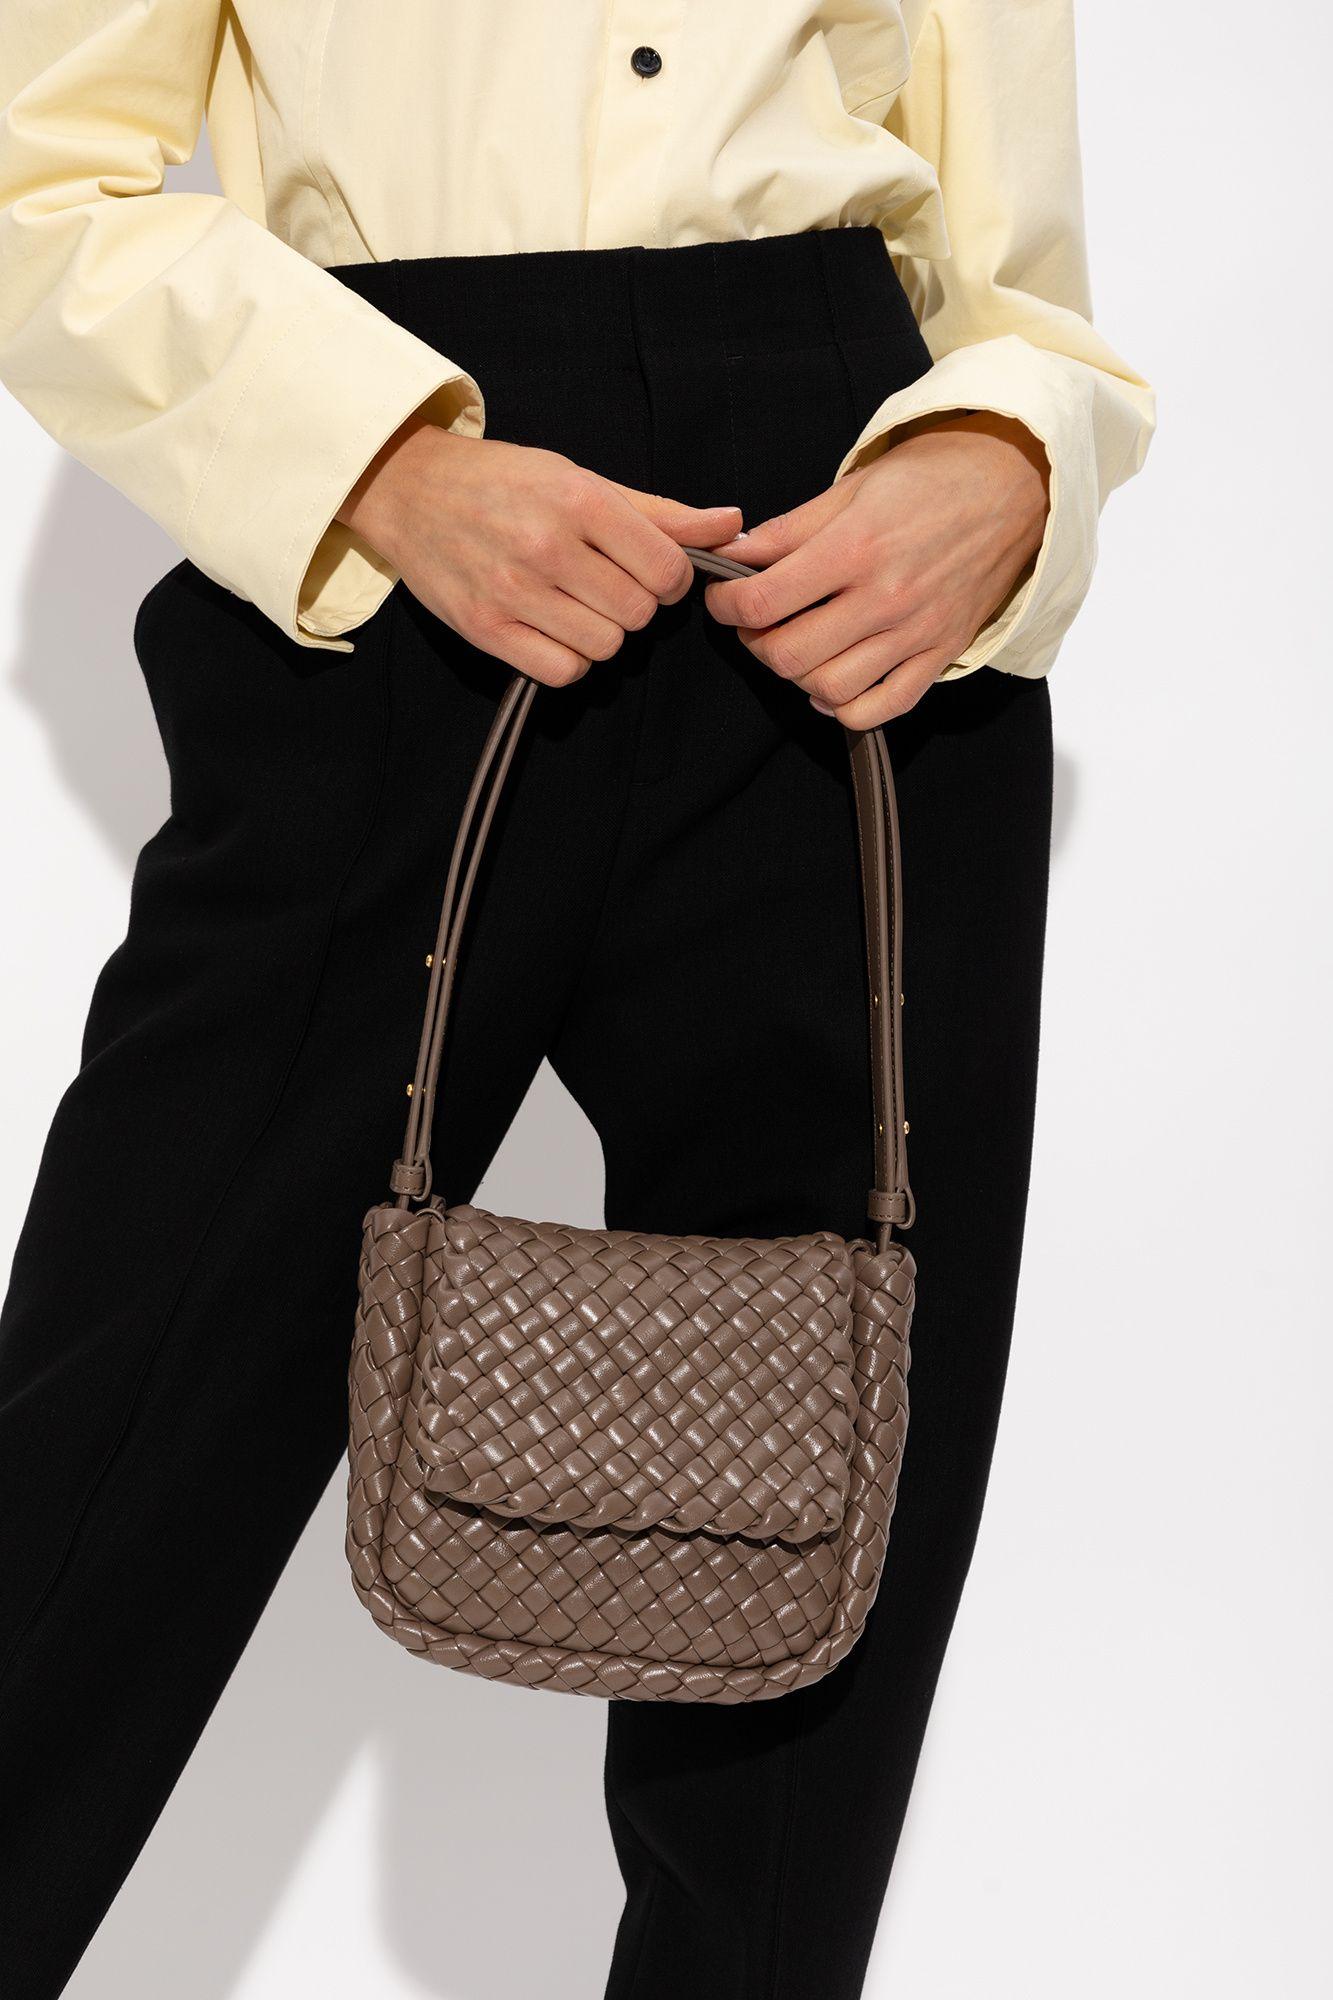 Cobble Mini Leather Shoulder Bag in Brown - Bottega Veneta